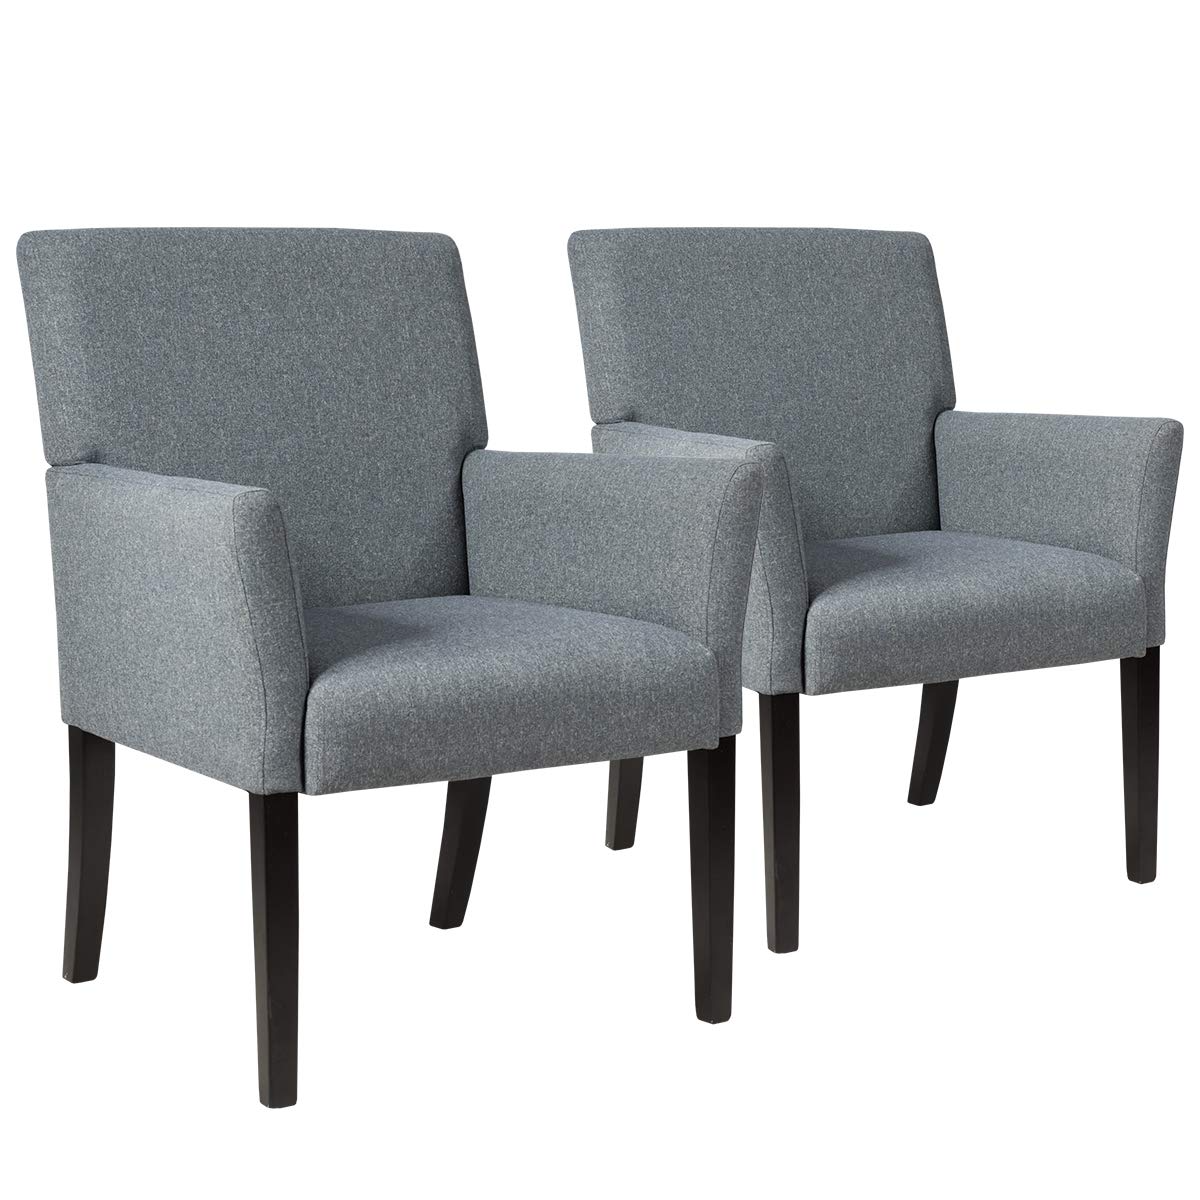 Giantex Fabric Executive Guest Chair